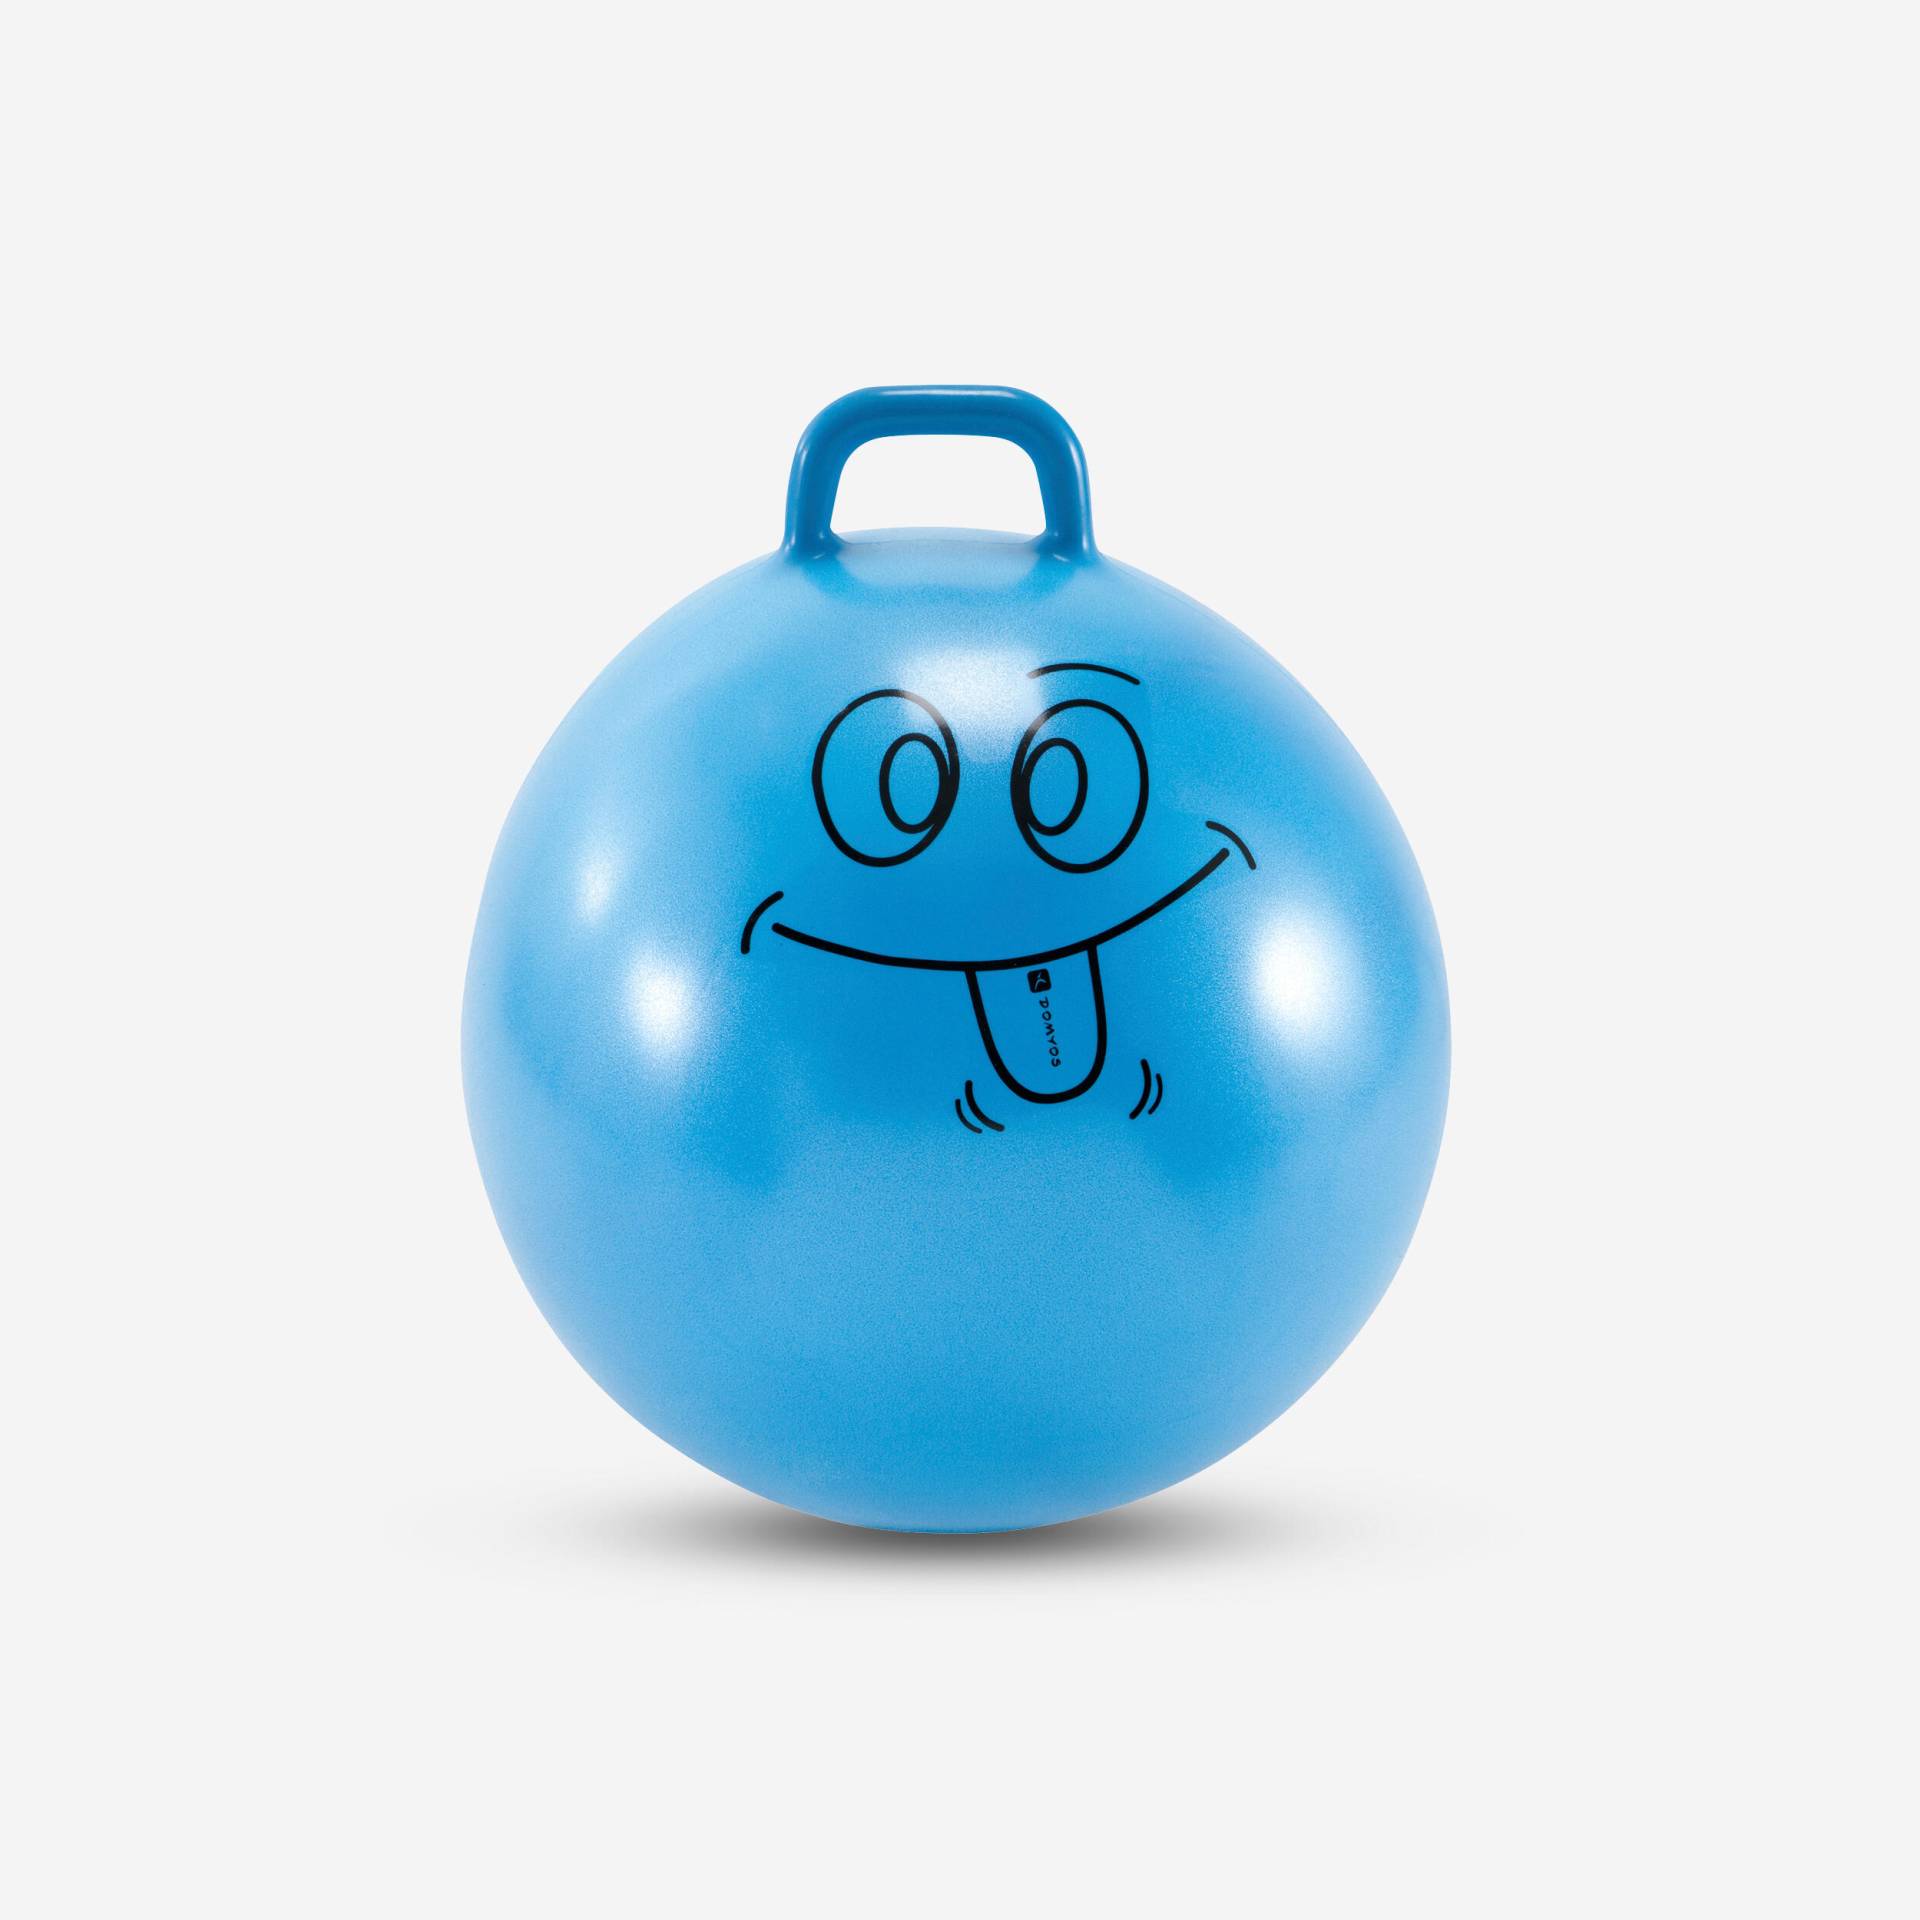 Hüpfball Kinder 60 cm - Resist blau von Domyos